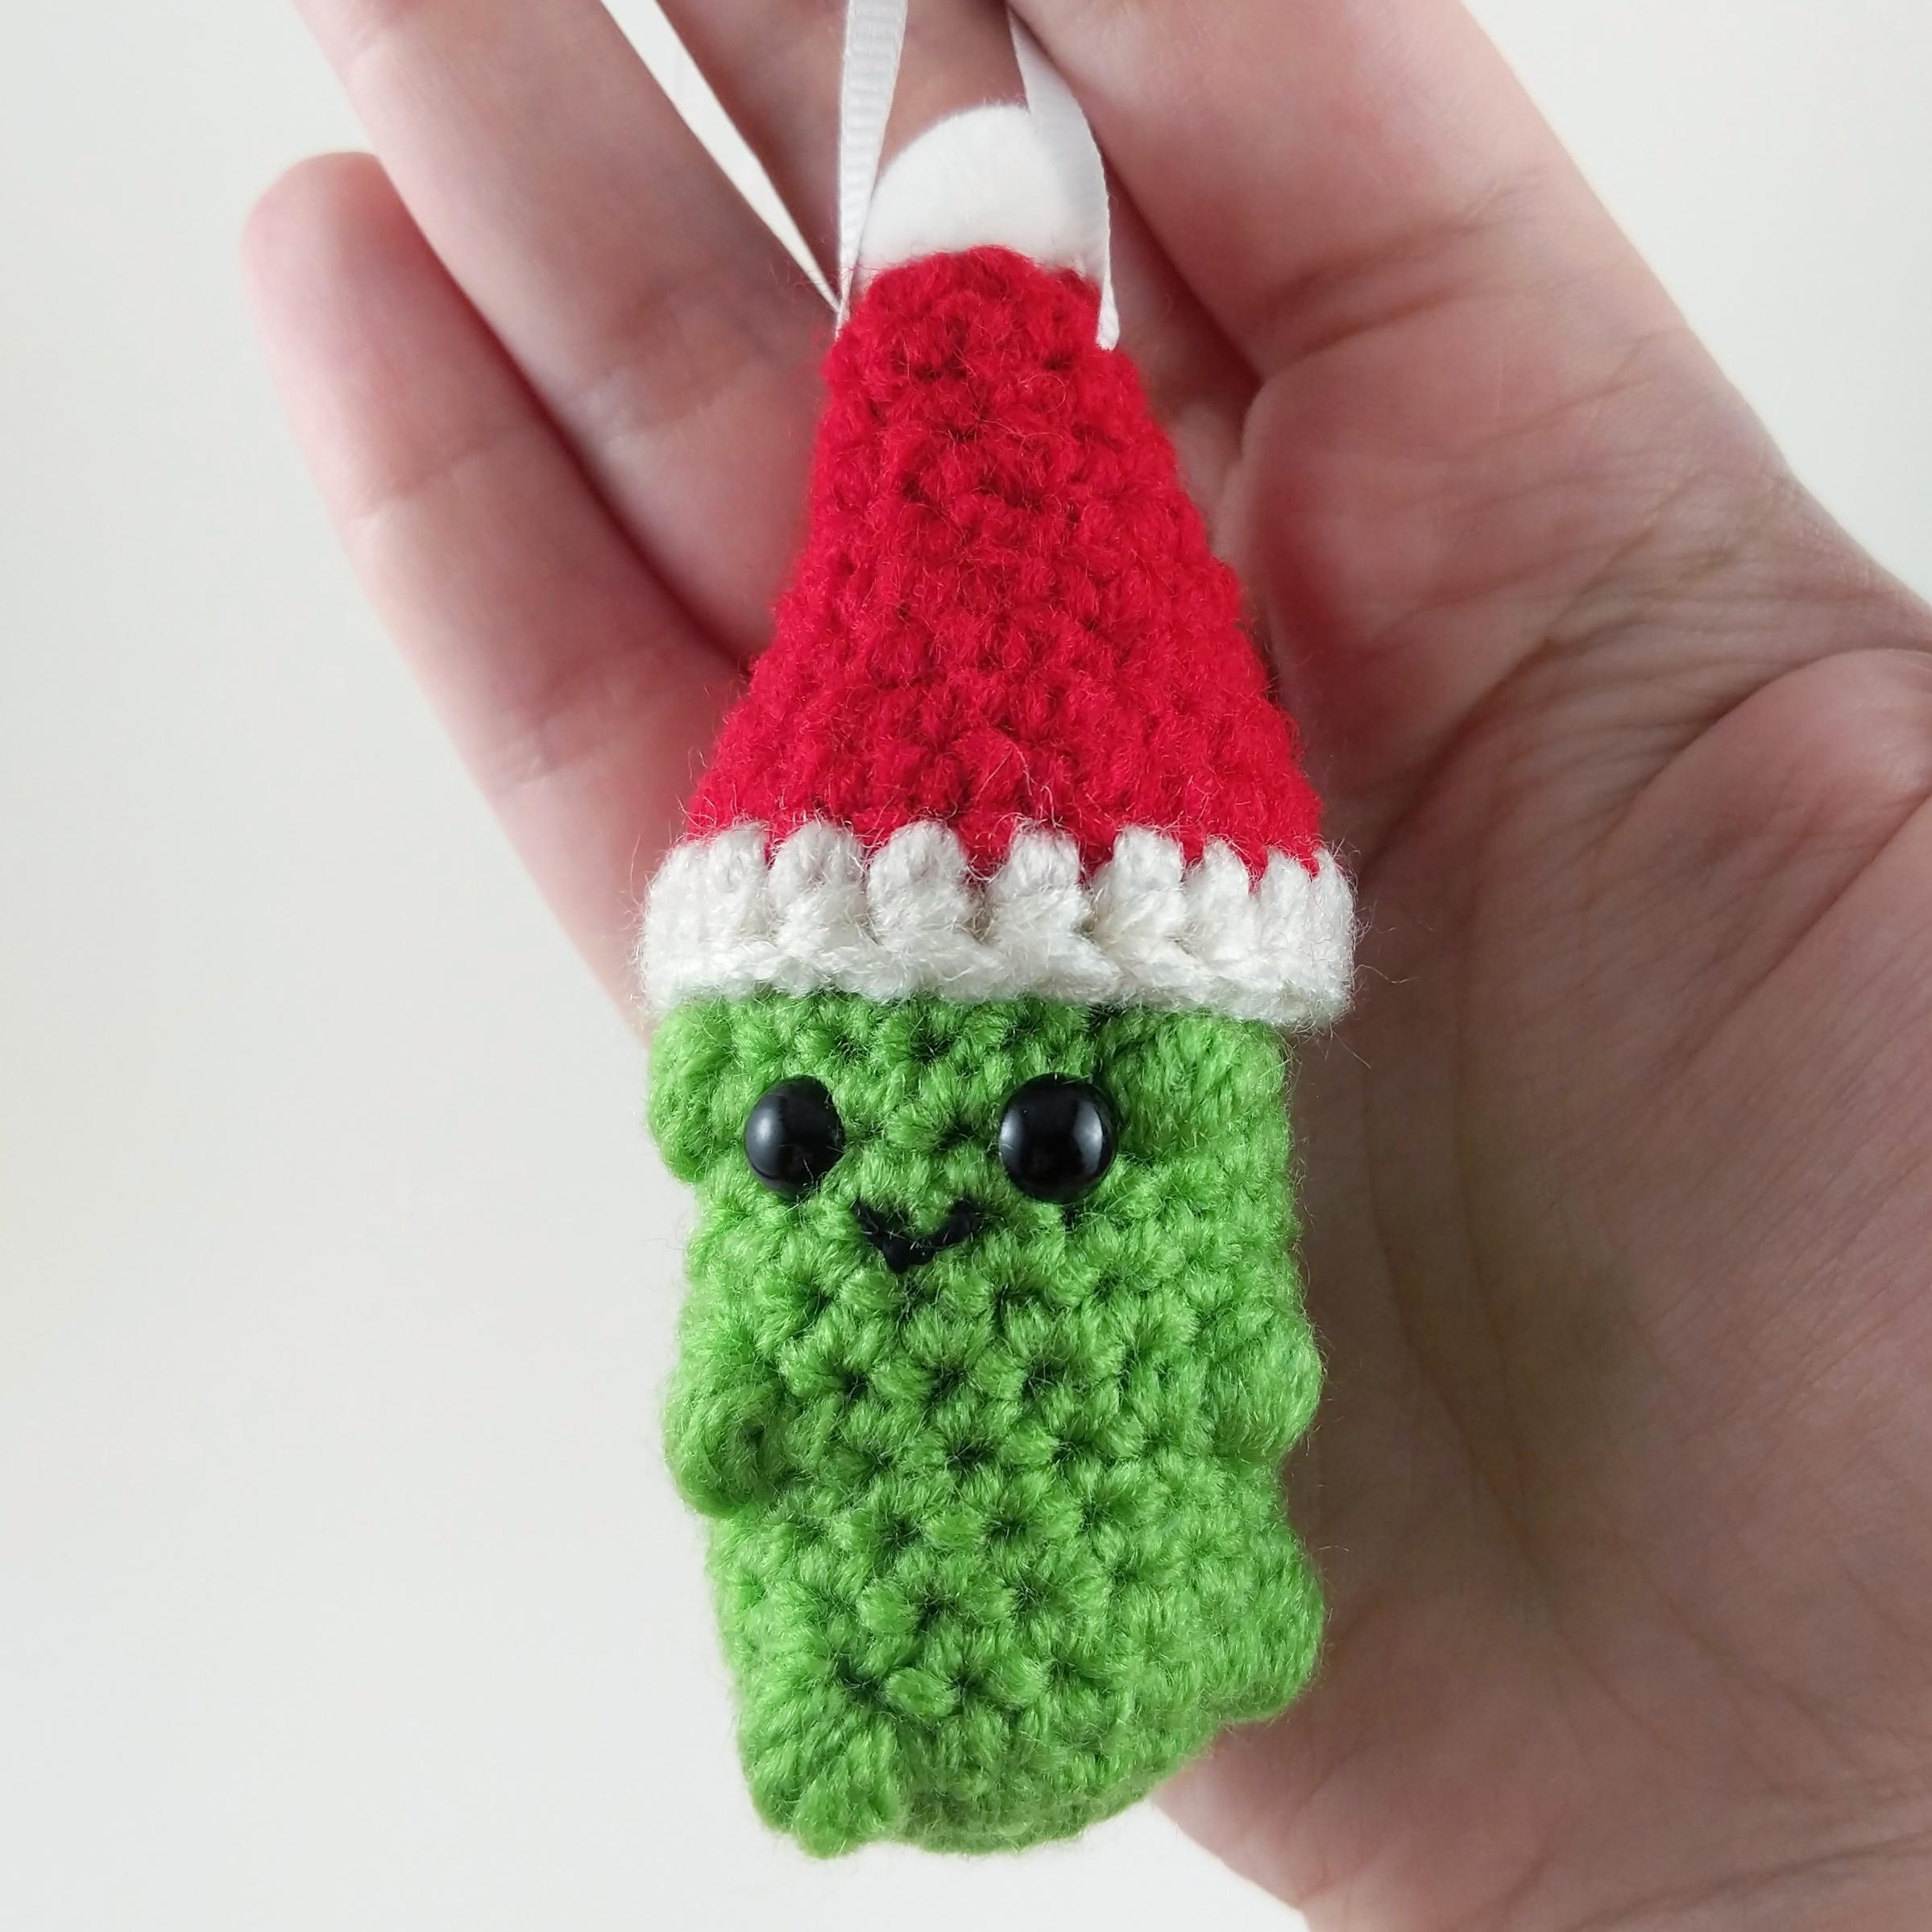 Christmas Pickle – a free crochet pattern - Shiny Happy World